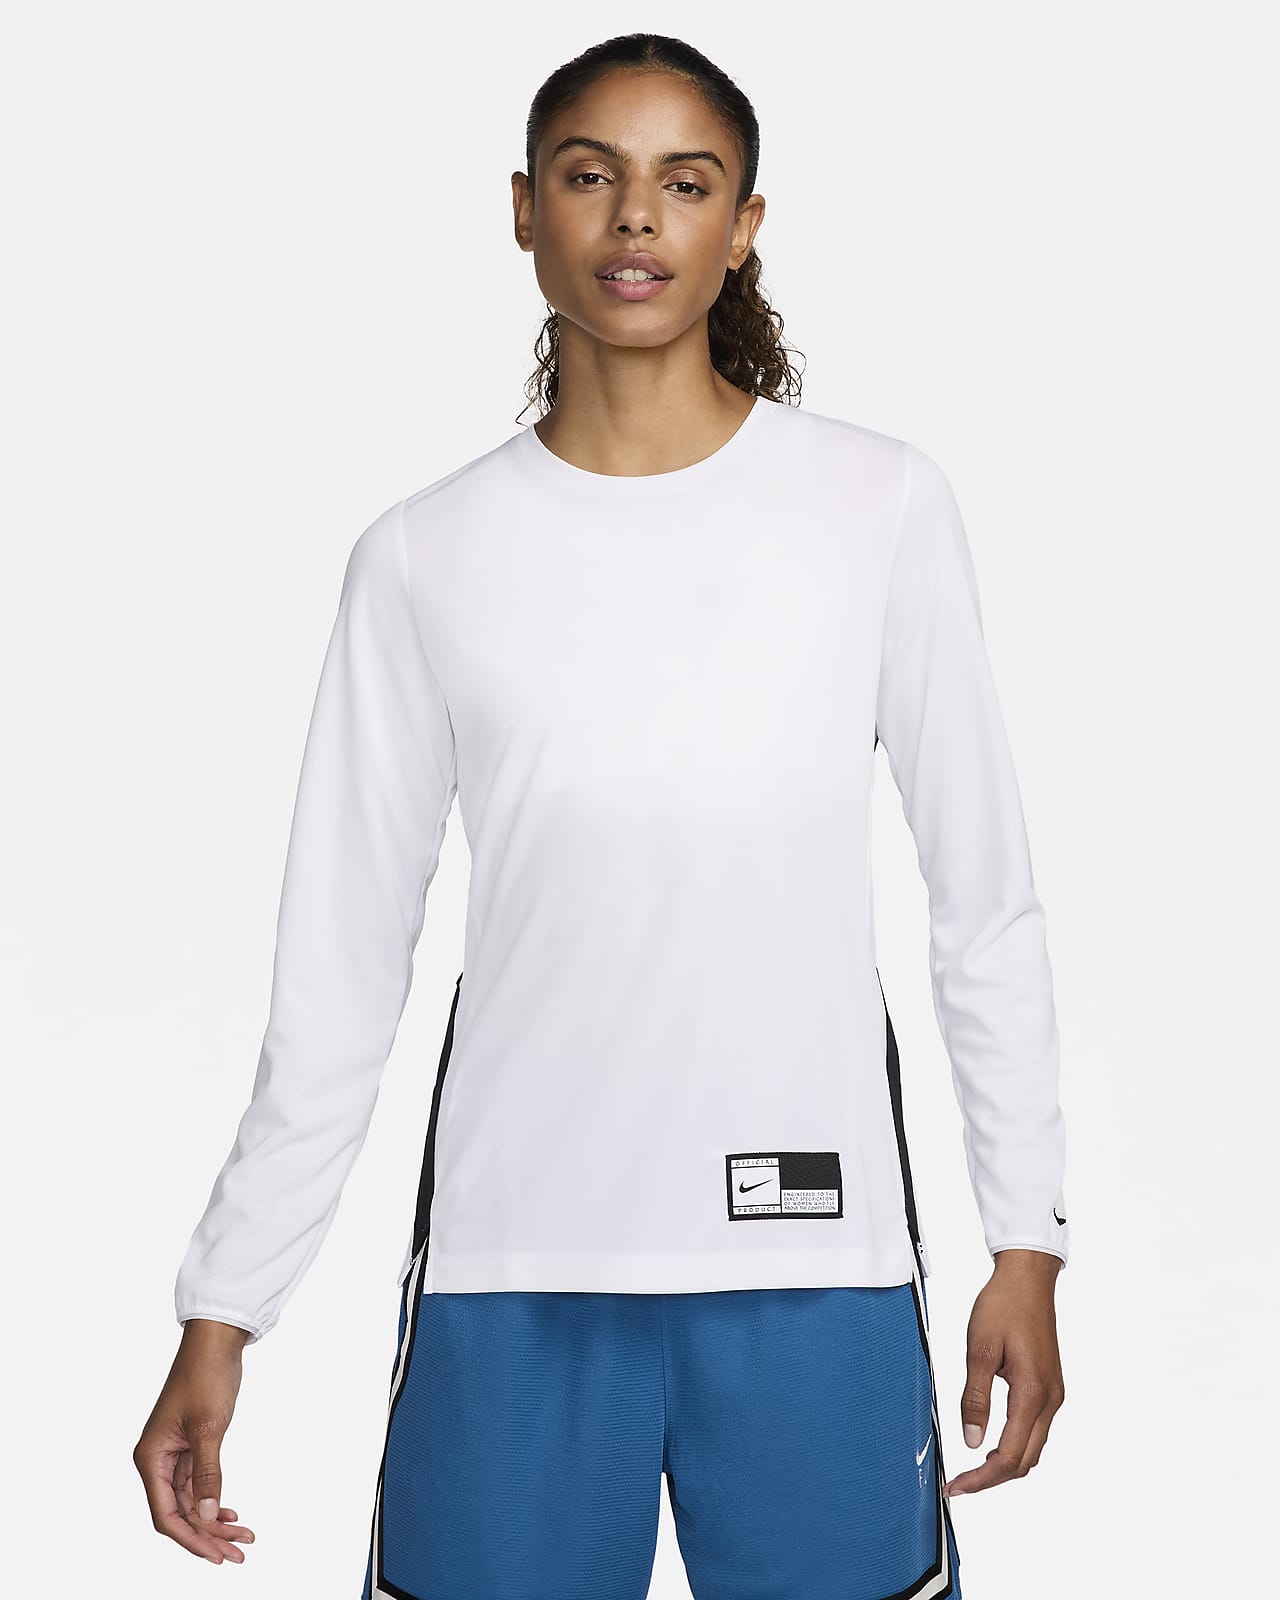 Nike Women's Dri-FIT Long-Sleeve Warm-Up Basketball Top